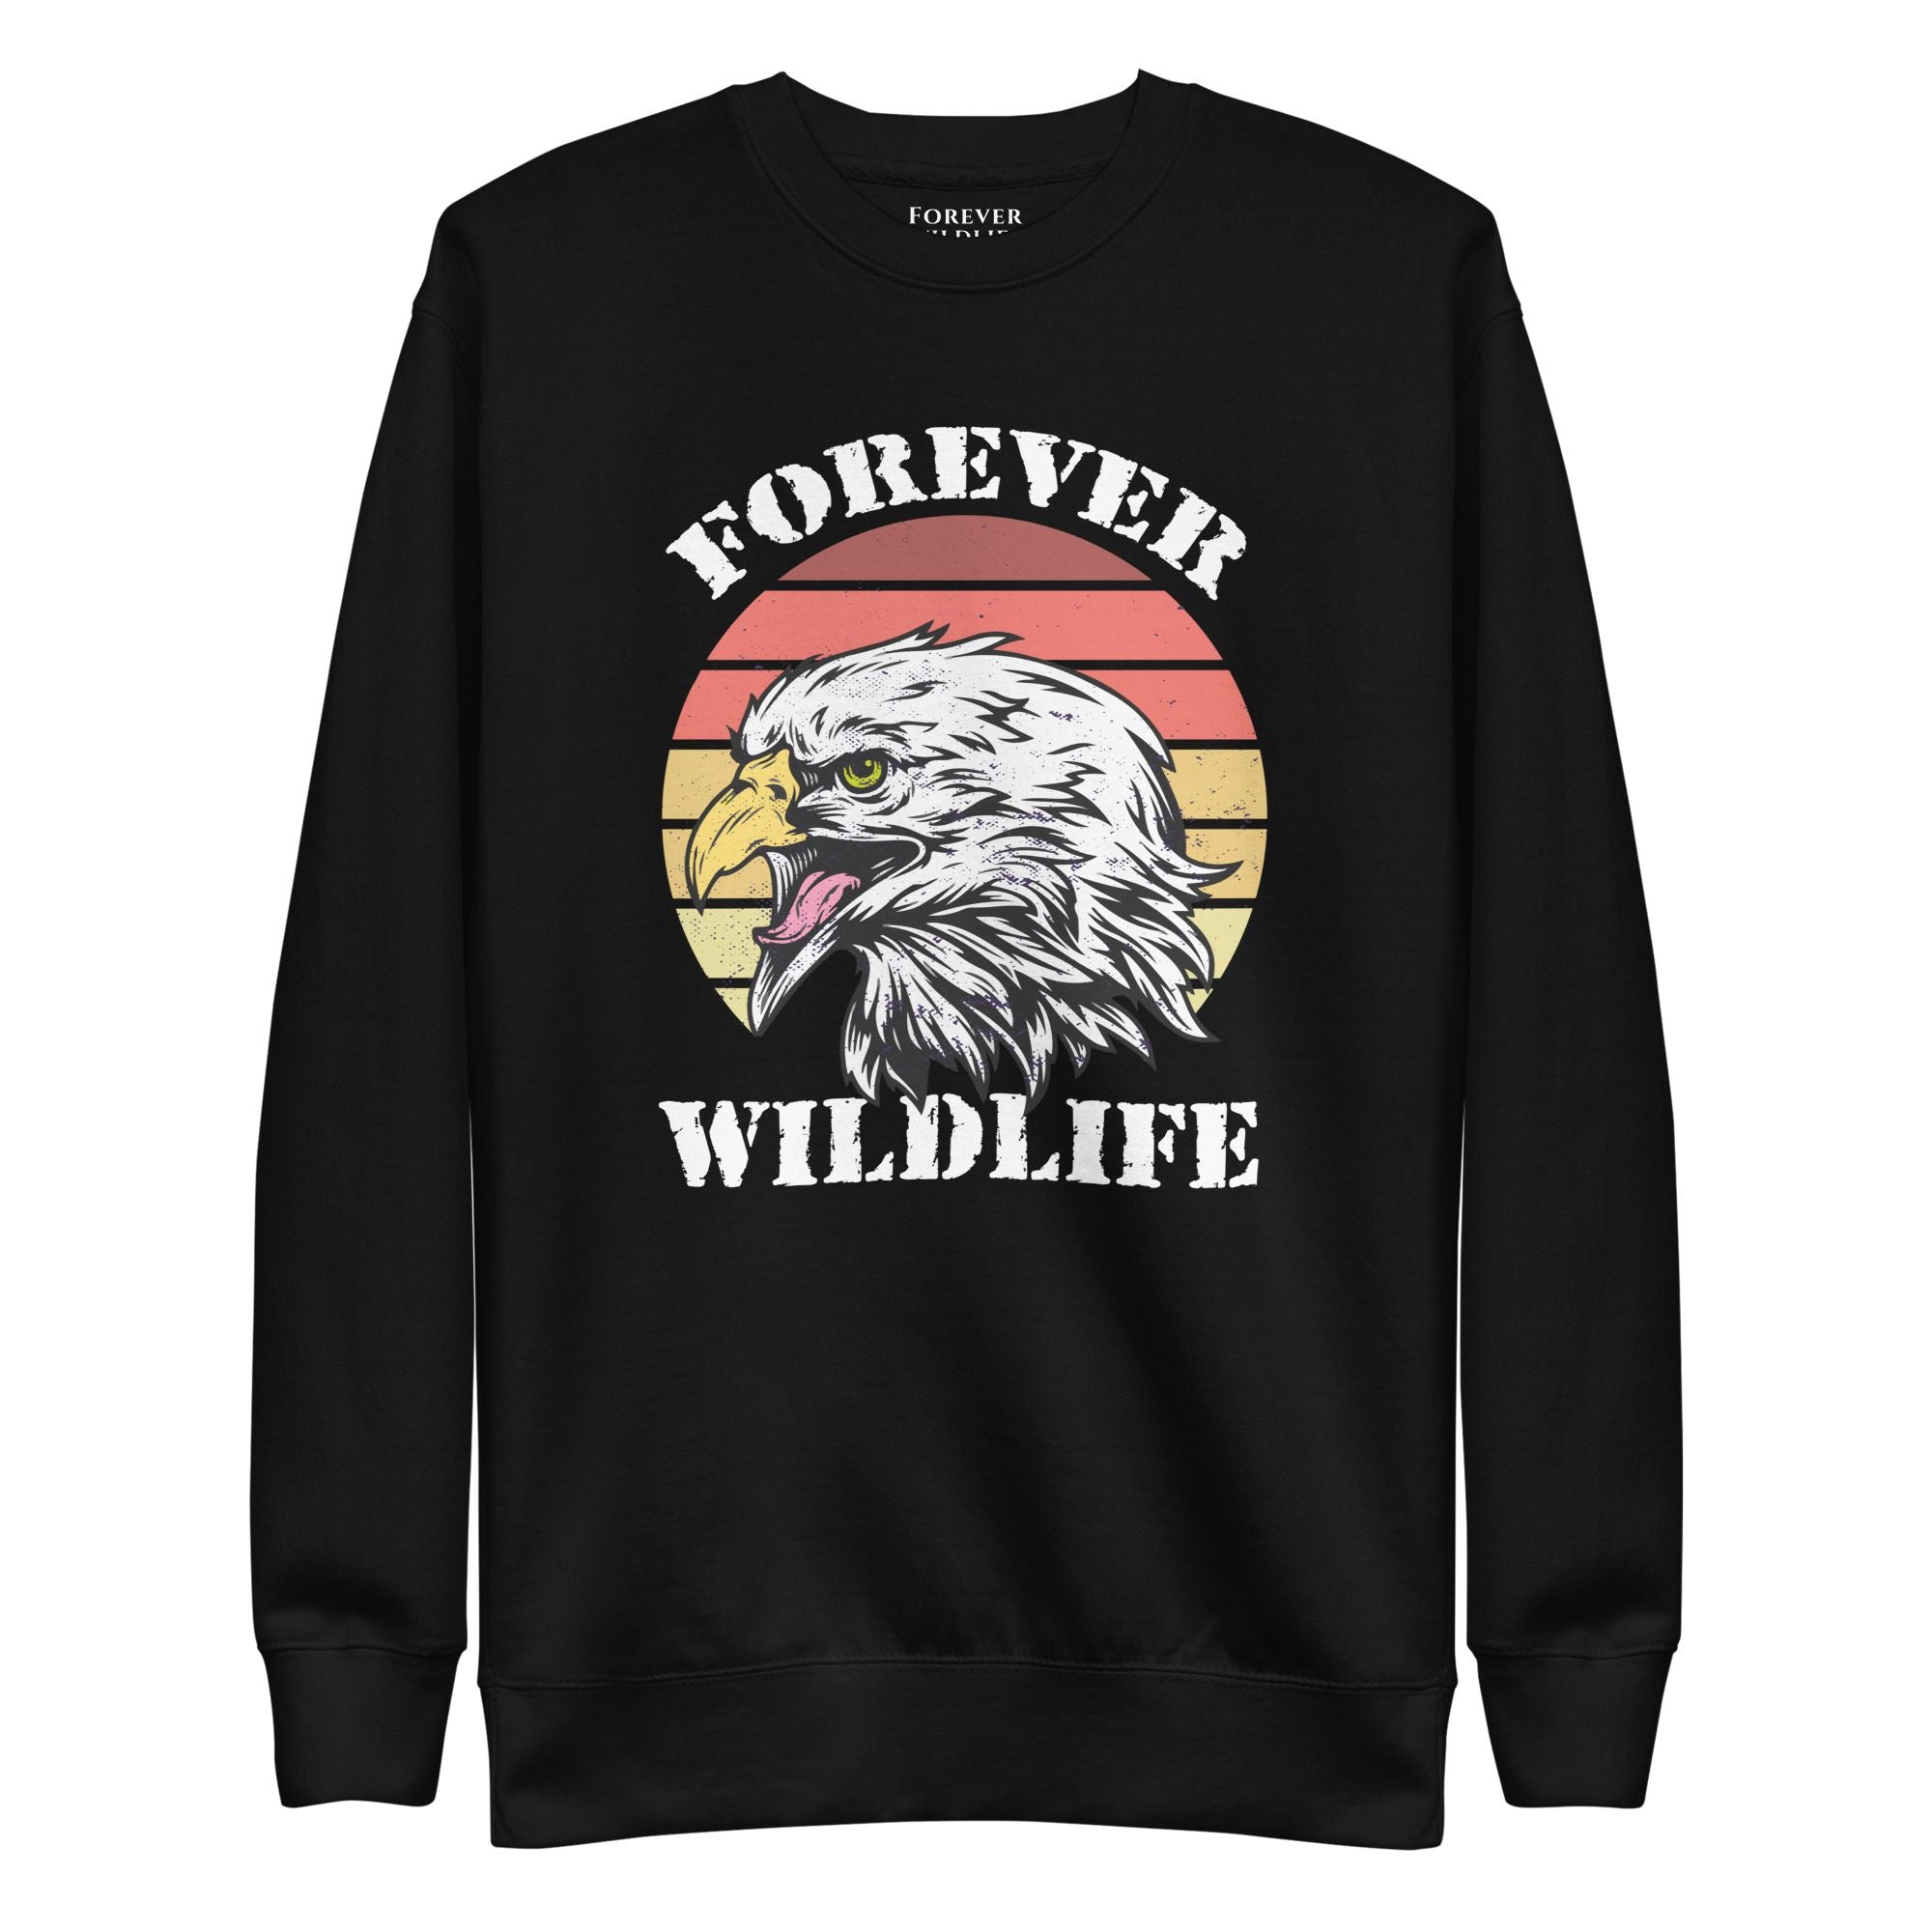 Eagle Sweatshirt in Black-Premium Wildlife Animal Inspiration Sweatshirt Design, part of Wildlife Sweatshirts & Clothing from Forever Wildlife.